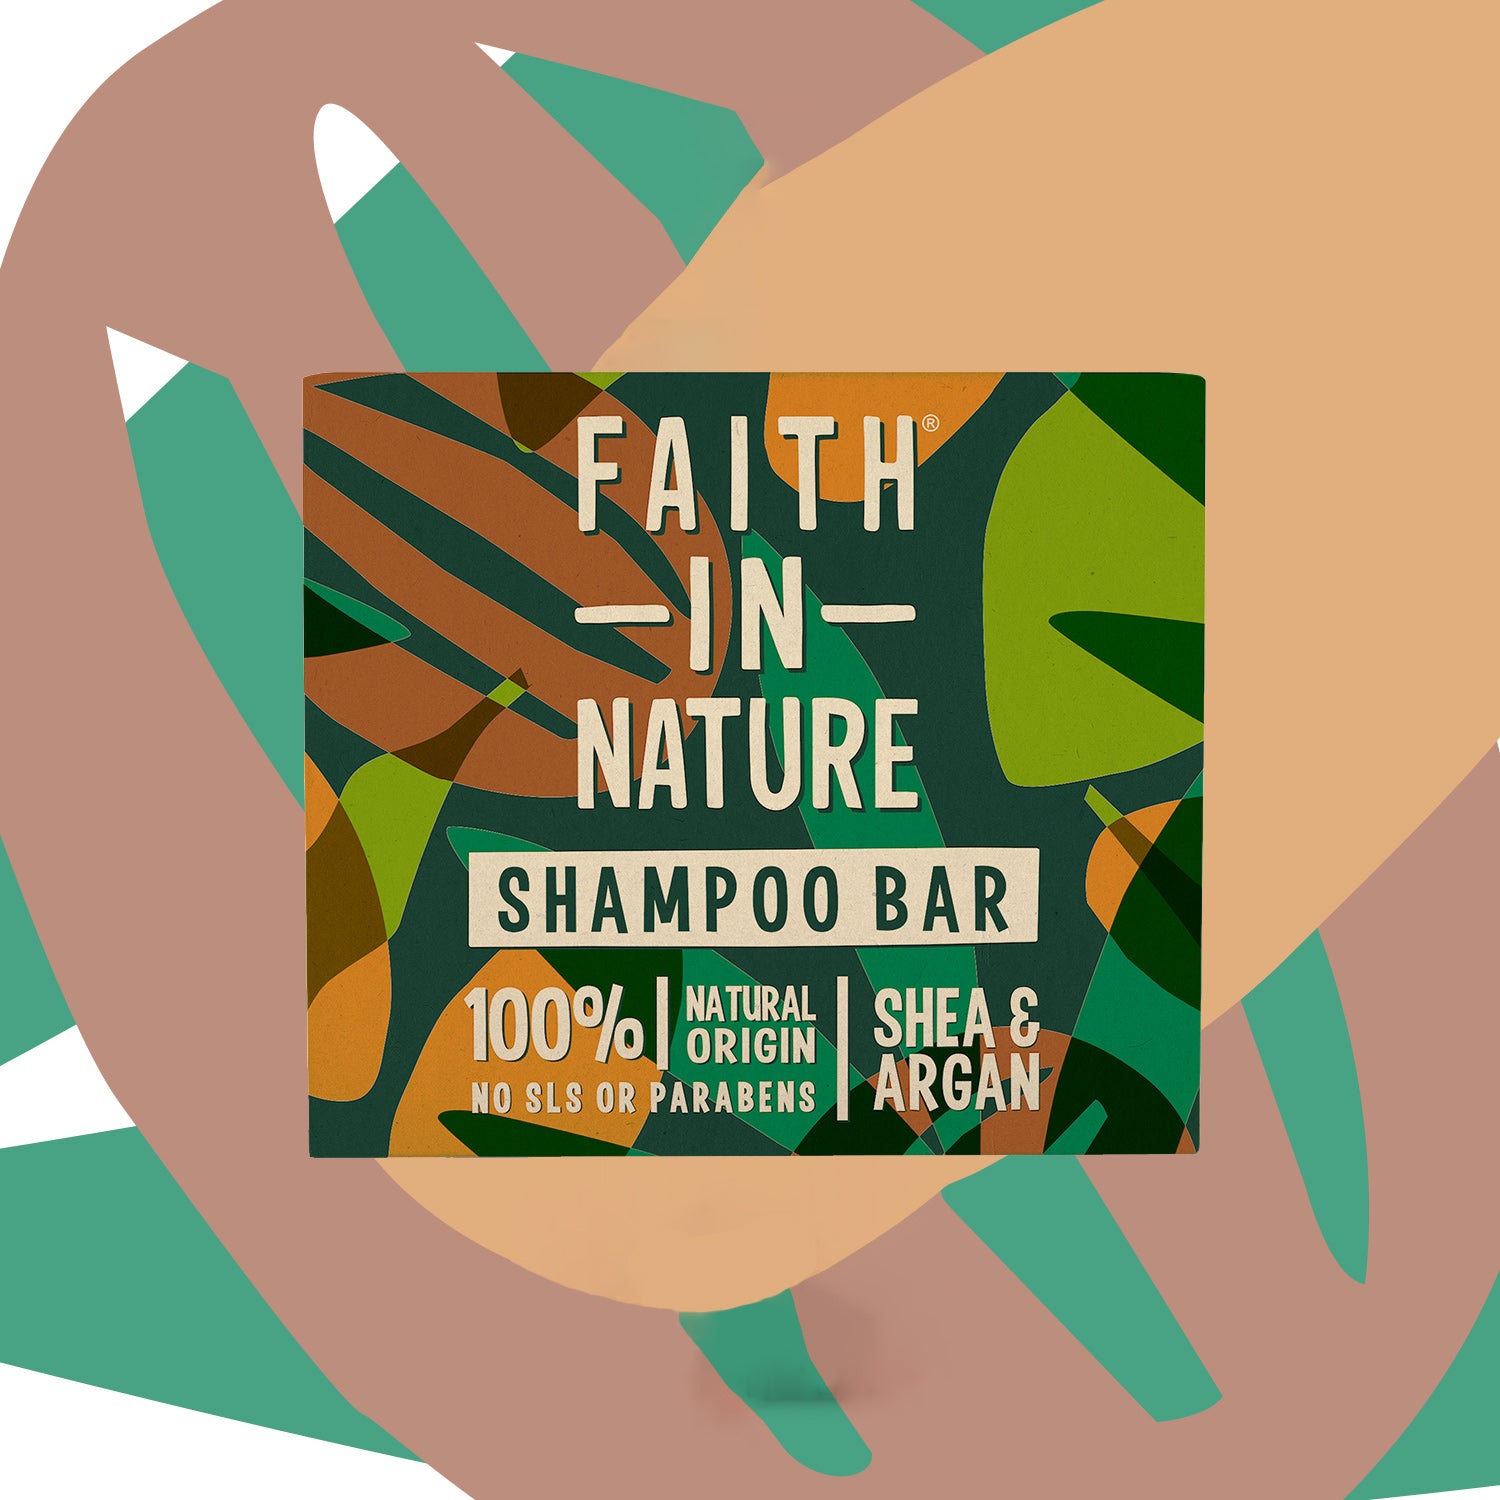 Faith in Nature Shampoo Bar 85g - Shea & Argan